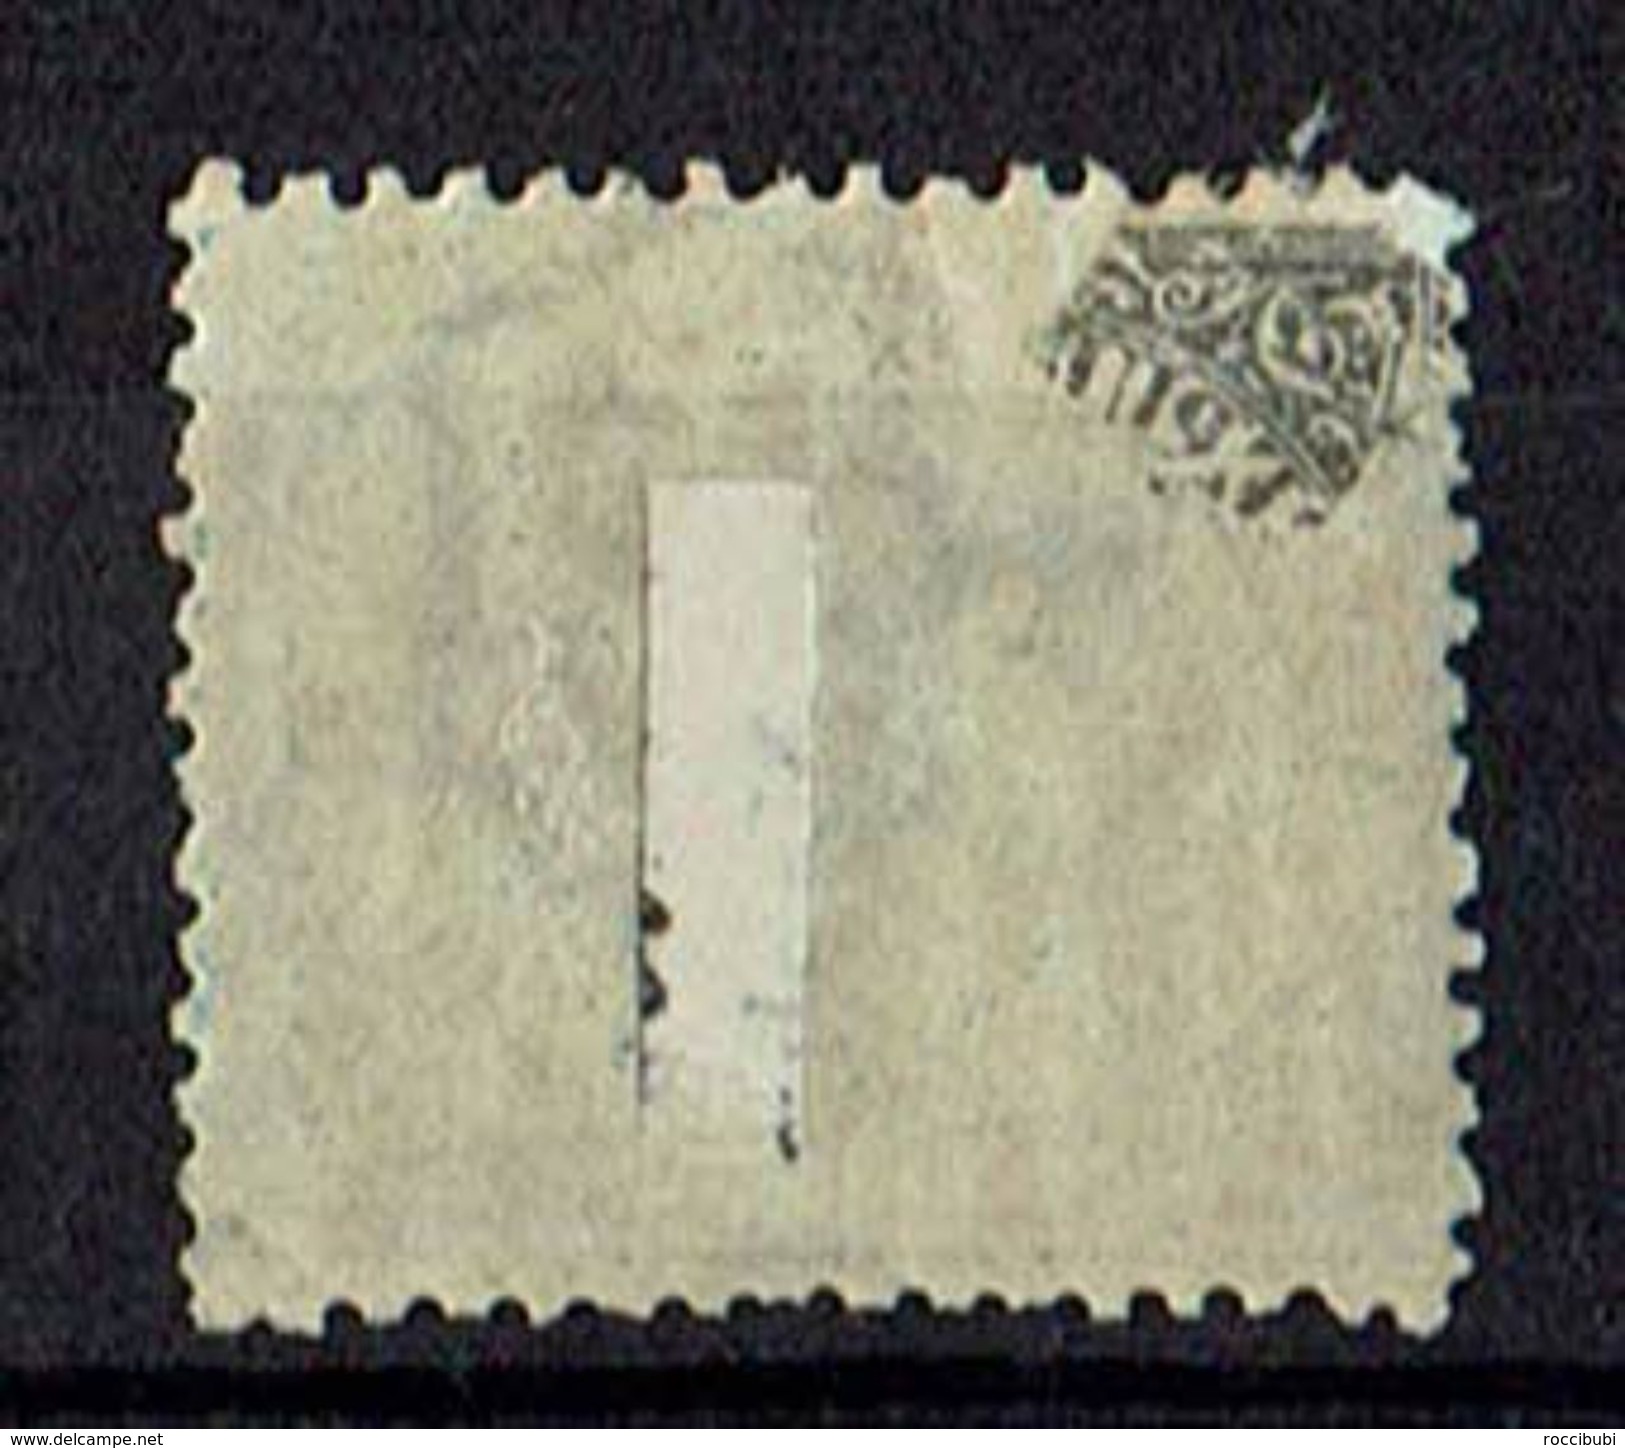 San Marino 1877 // Michel 1 * (9869) - Neufs